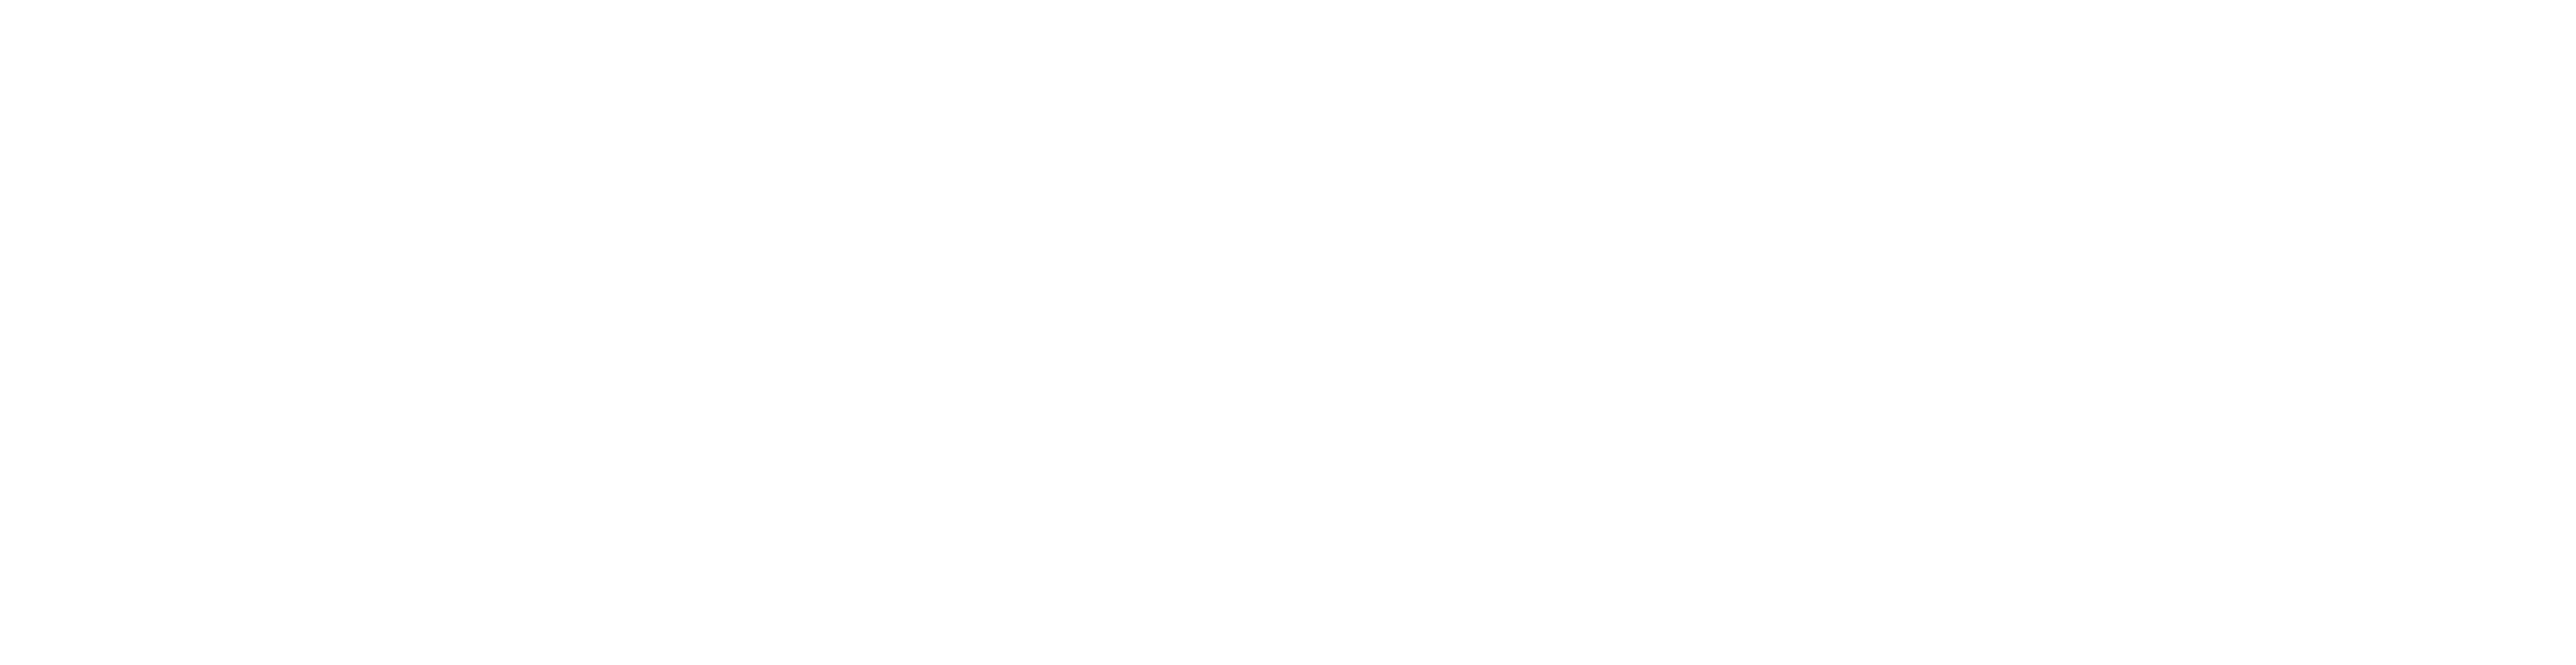 warehouse-hotel-logo-white